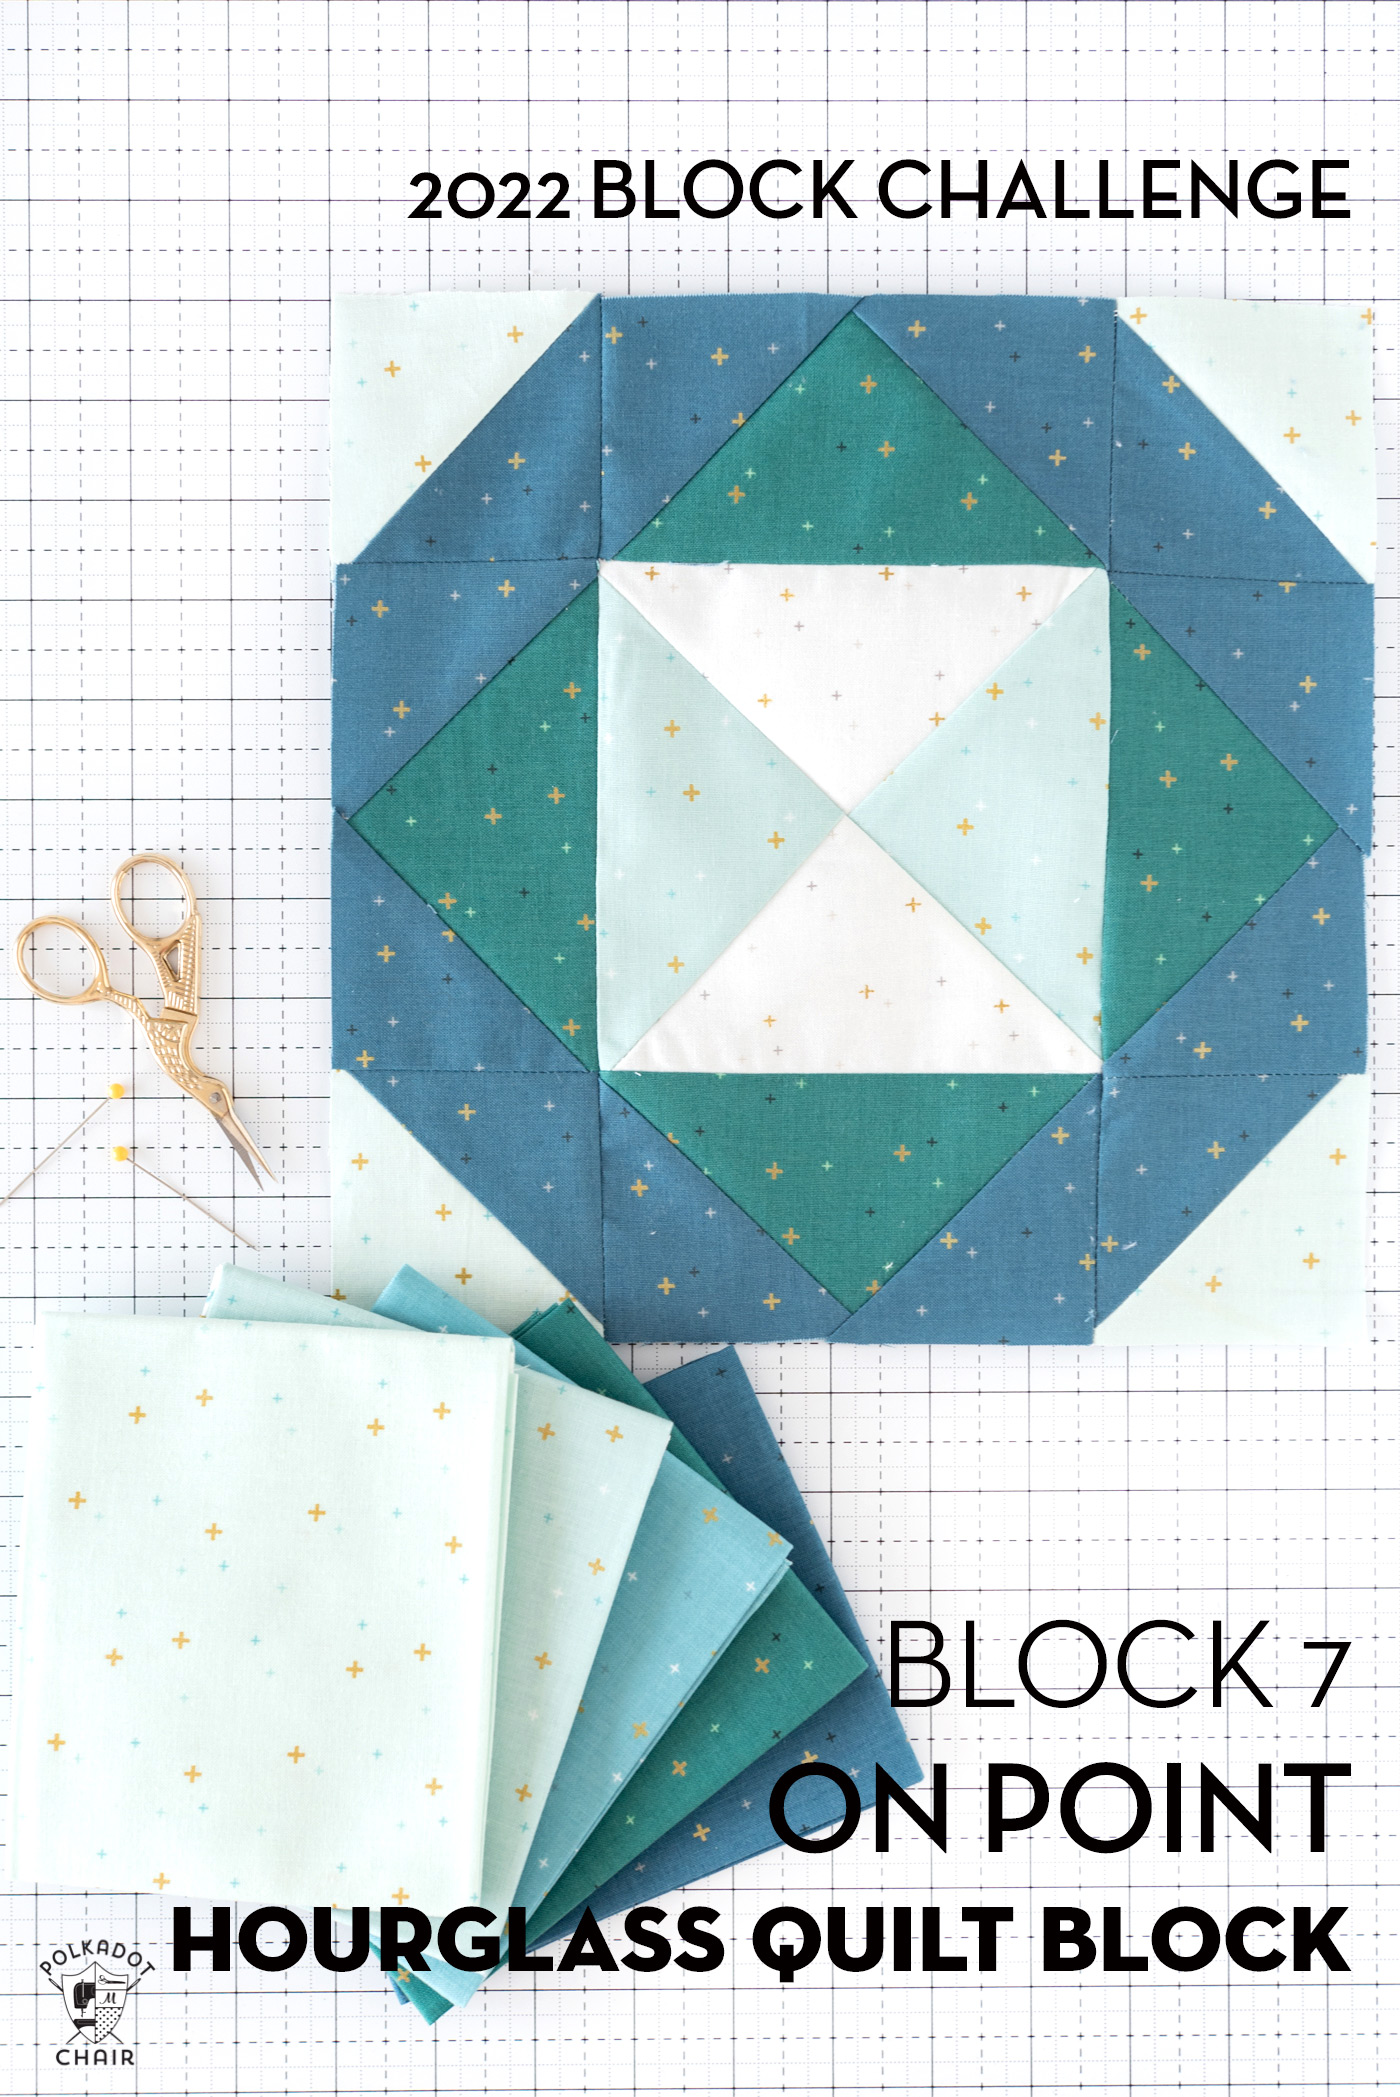 On Point Hourglass Quilt Block Pattern; RBD Challenge Block 7